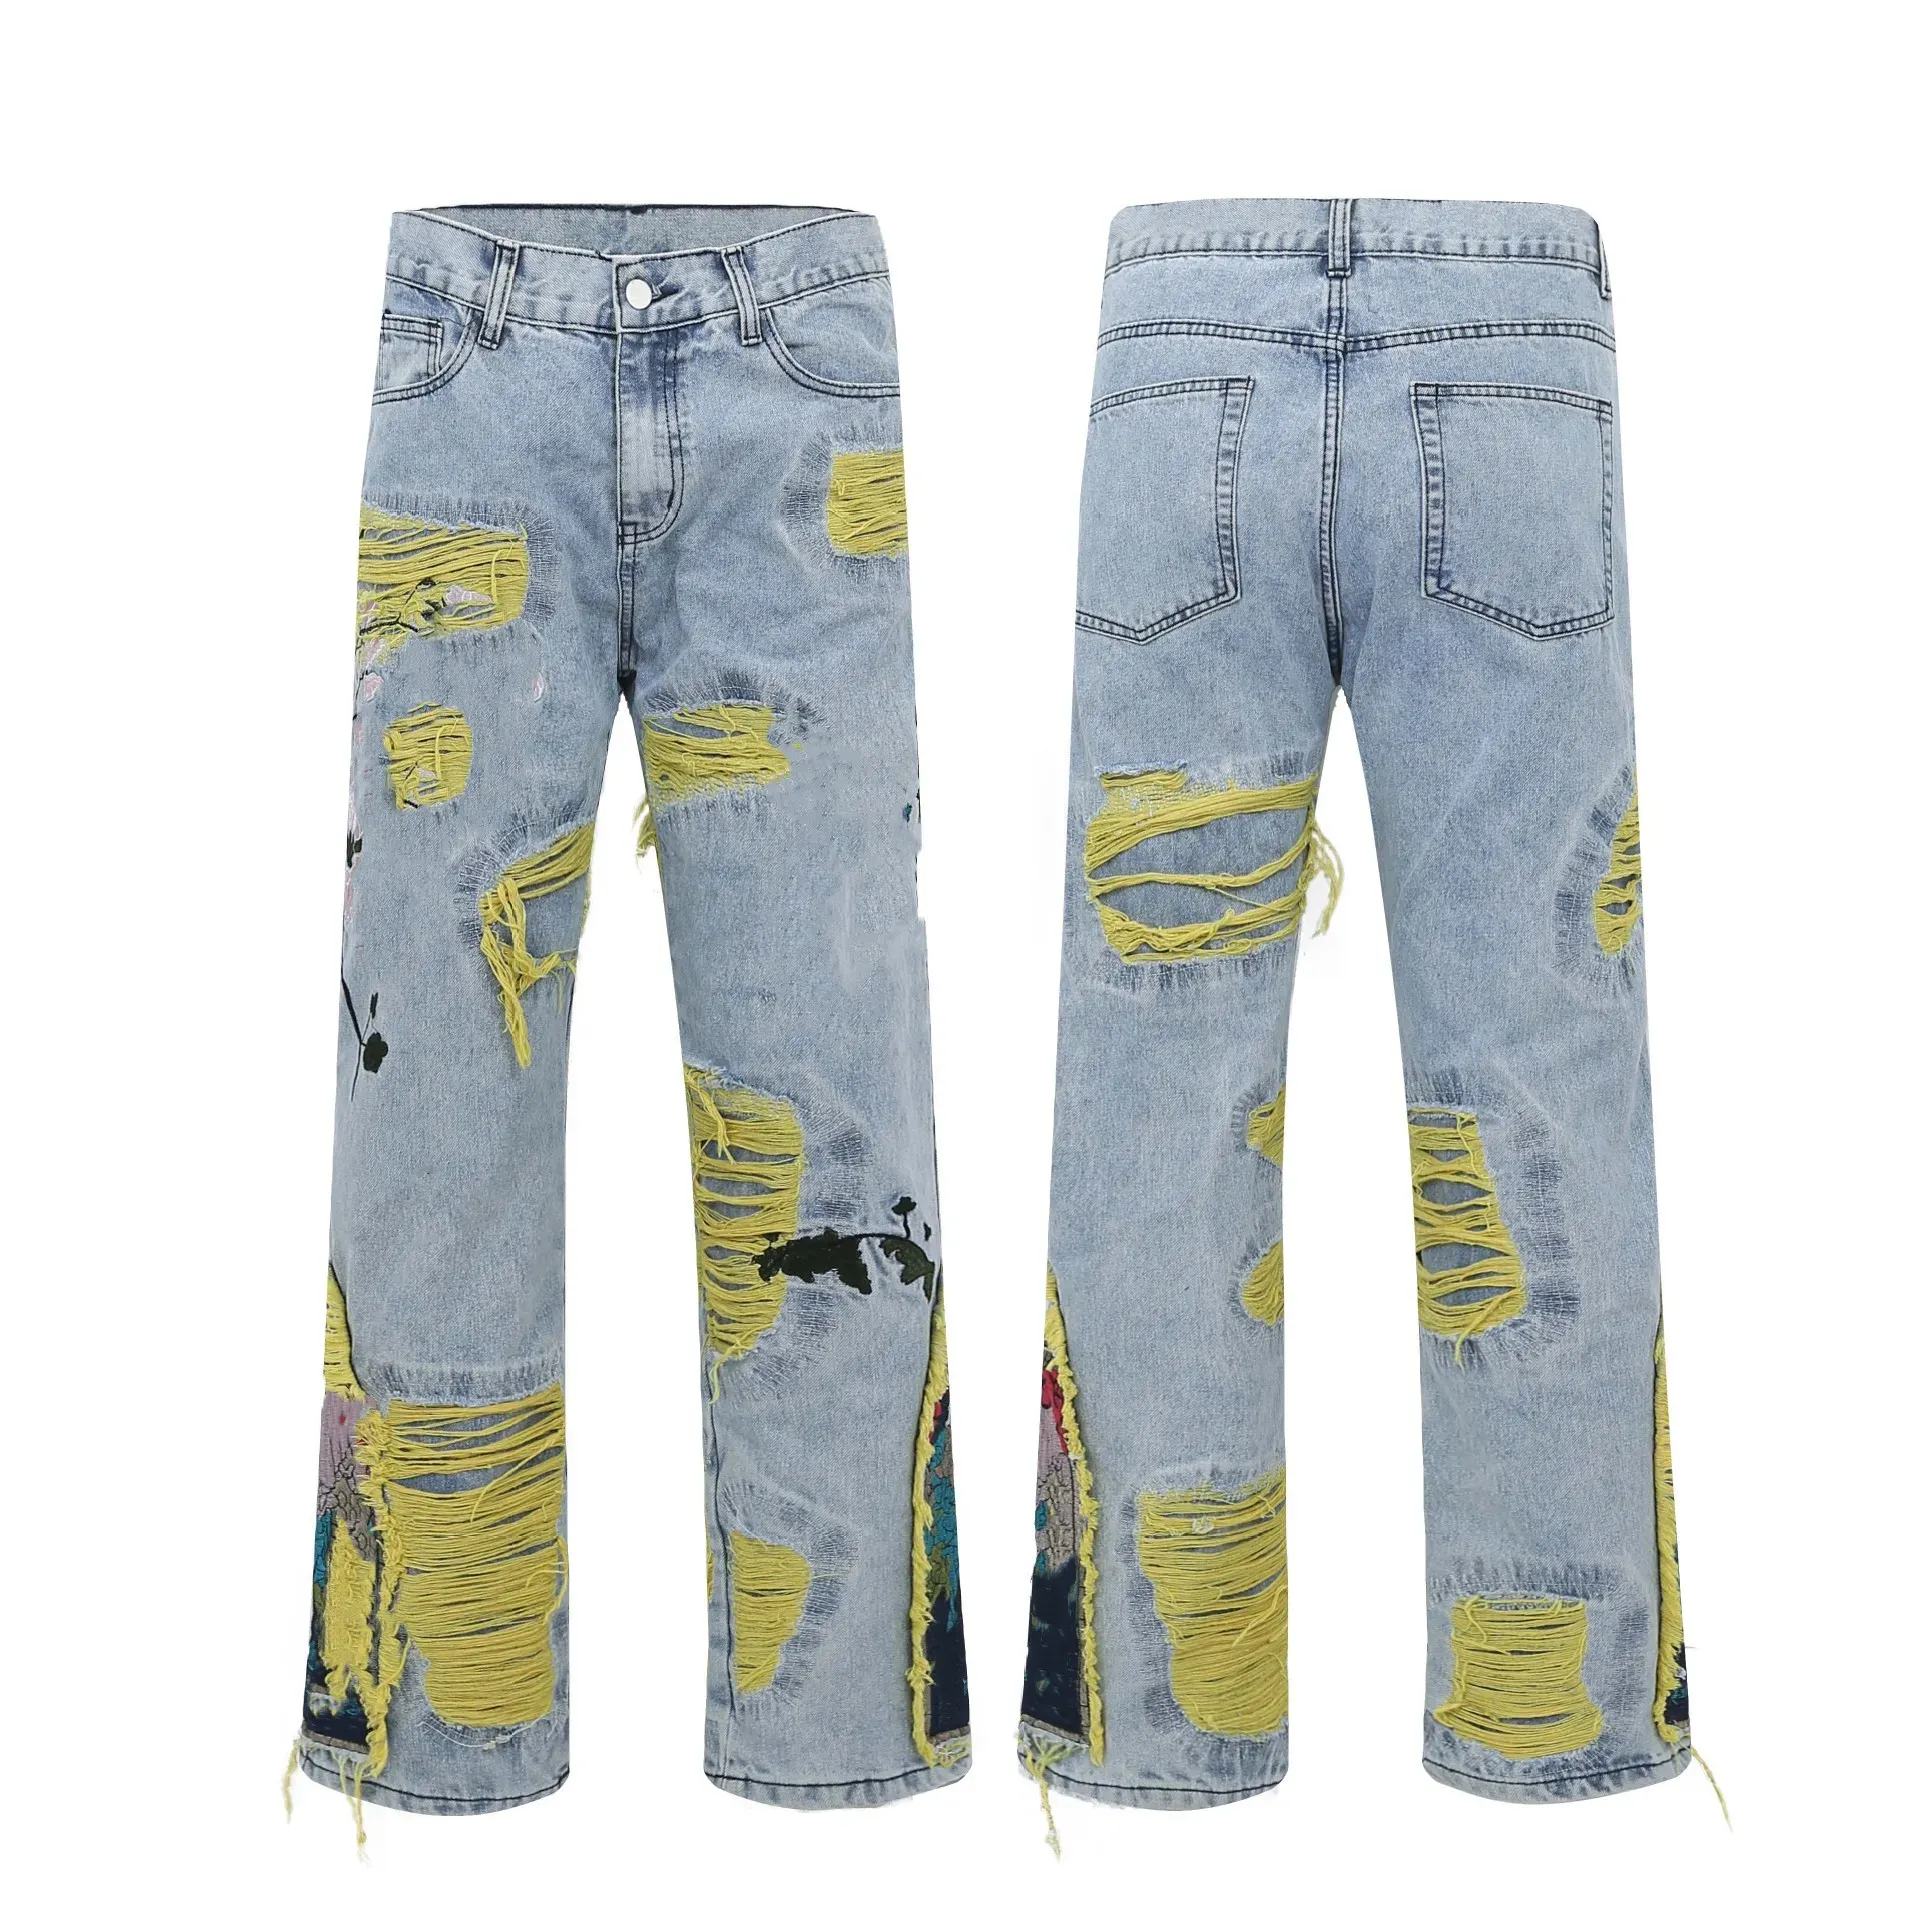 Jeans maschile designer di grandi dimensioni denim ricamato ricamato jean high street hole pantaloni a gamba pantaloni casual pantaloni s-3xl megogh-8 cxg8181